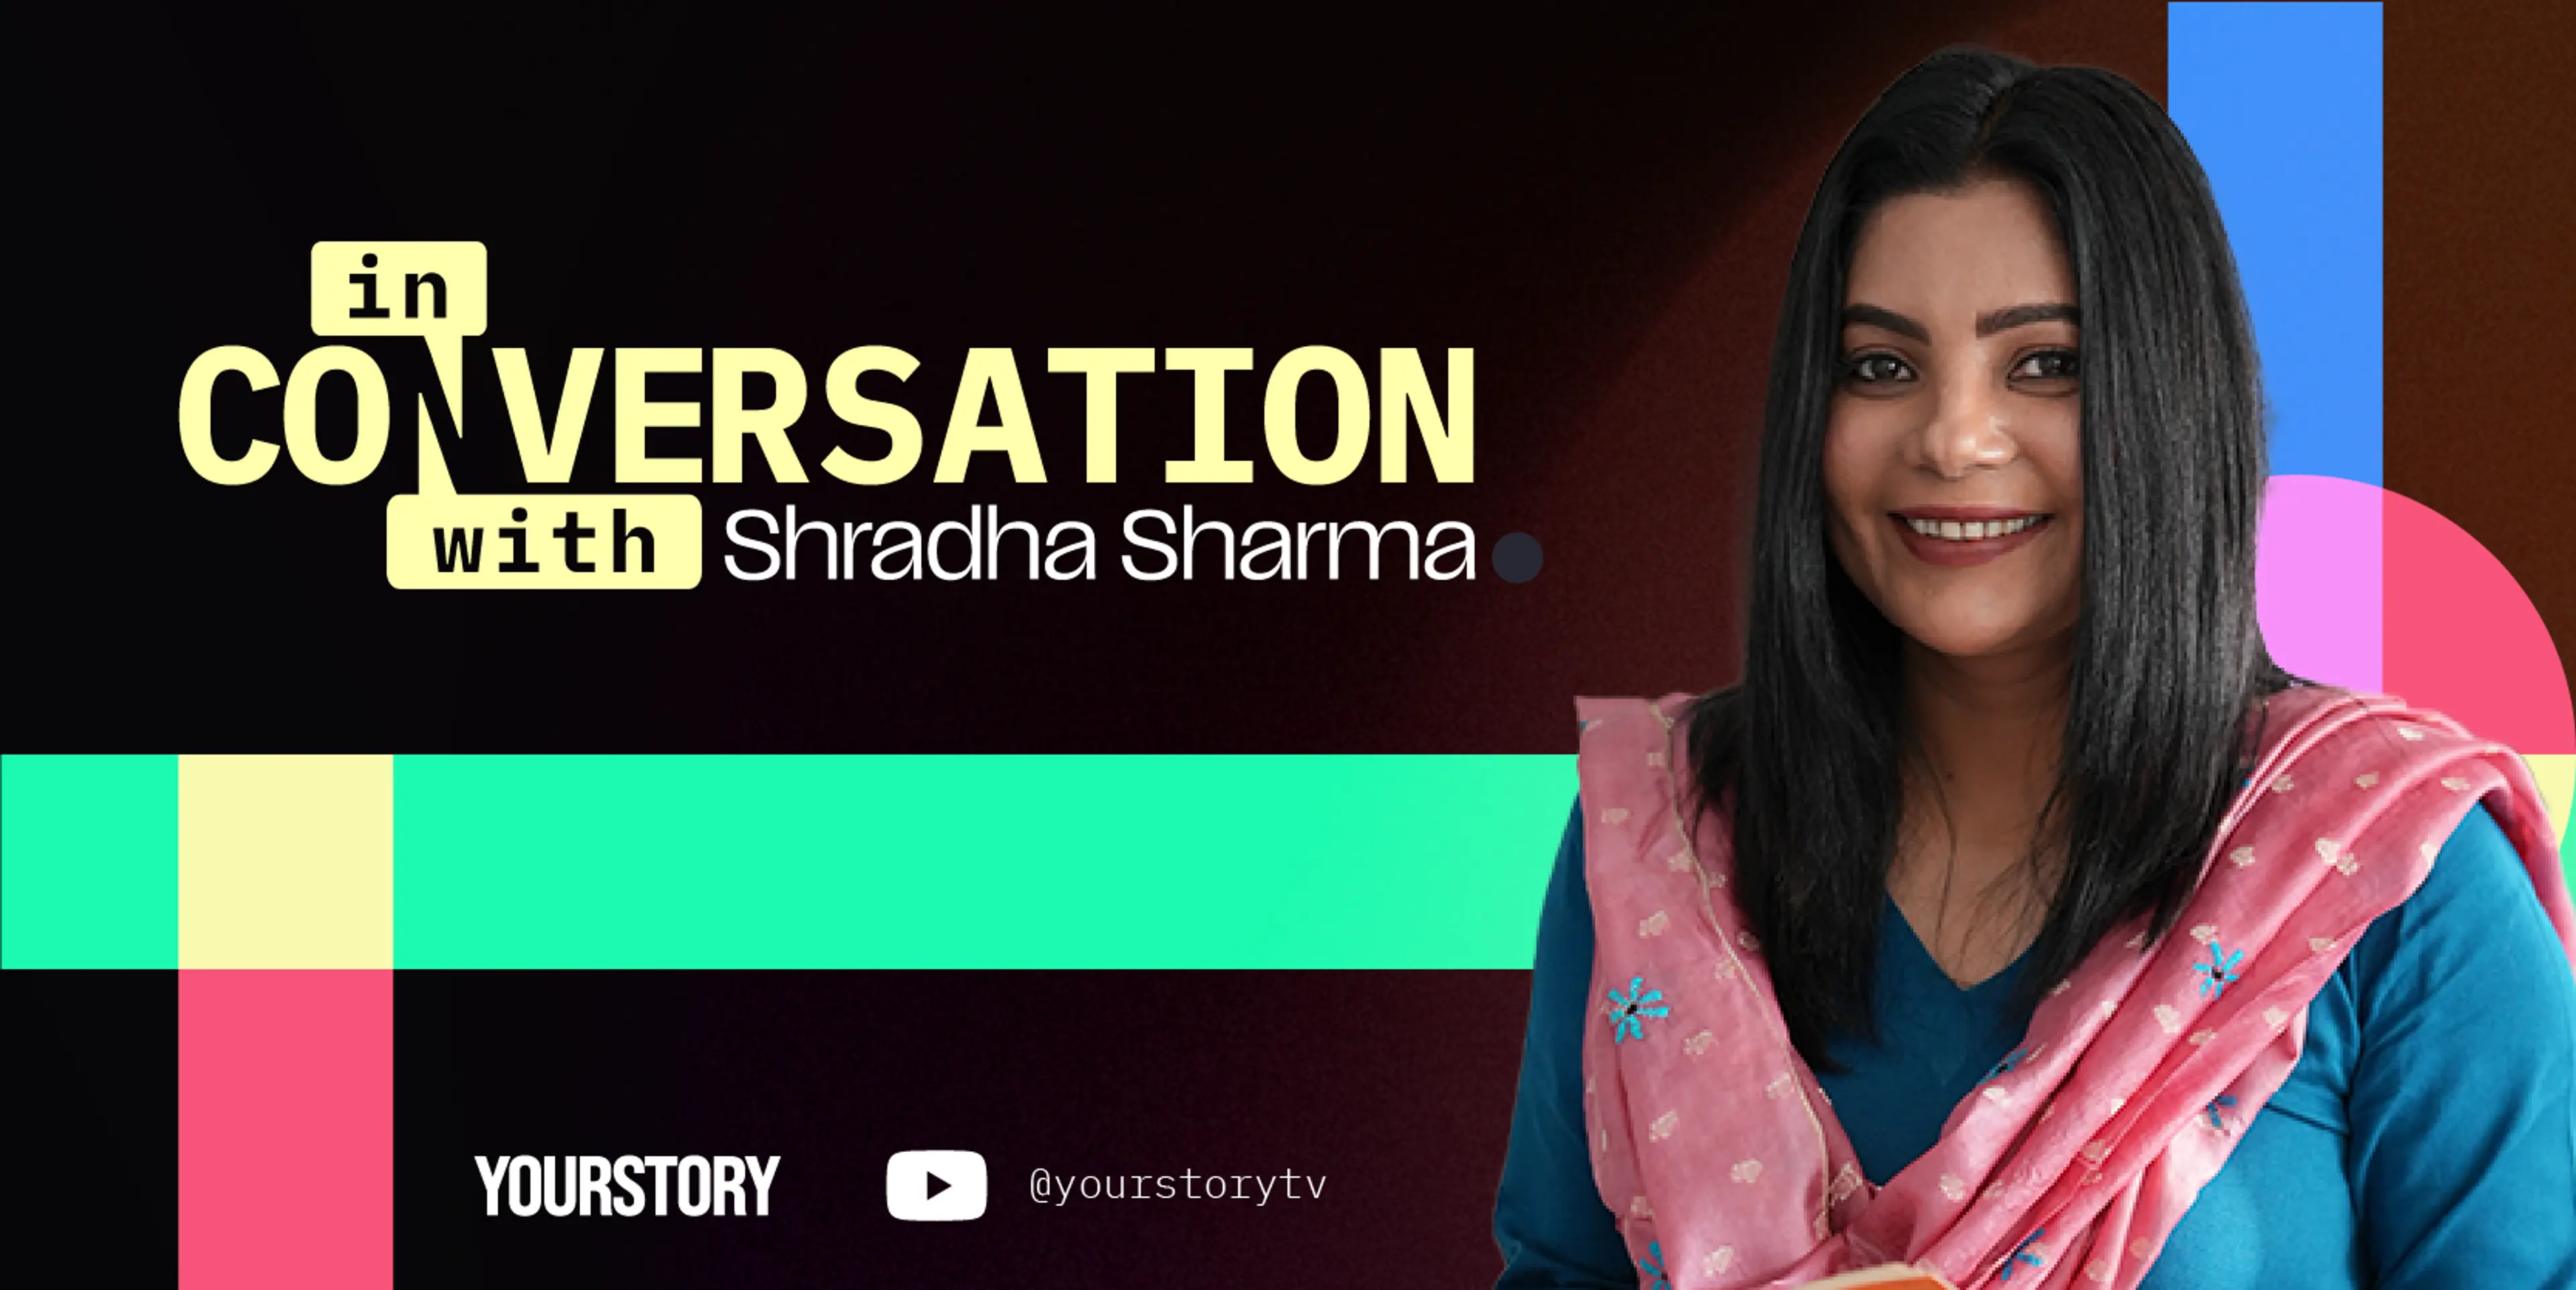 In conversation with Shradha Sharma